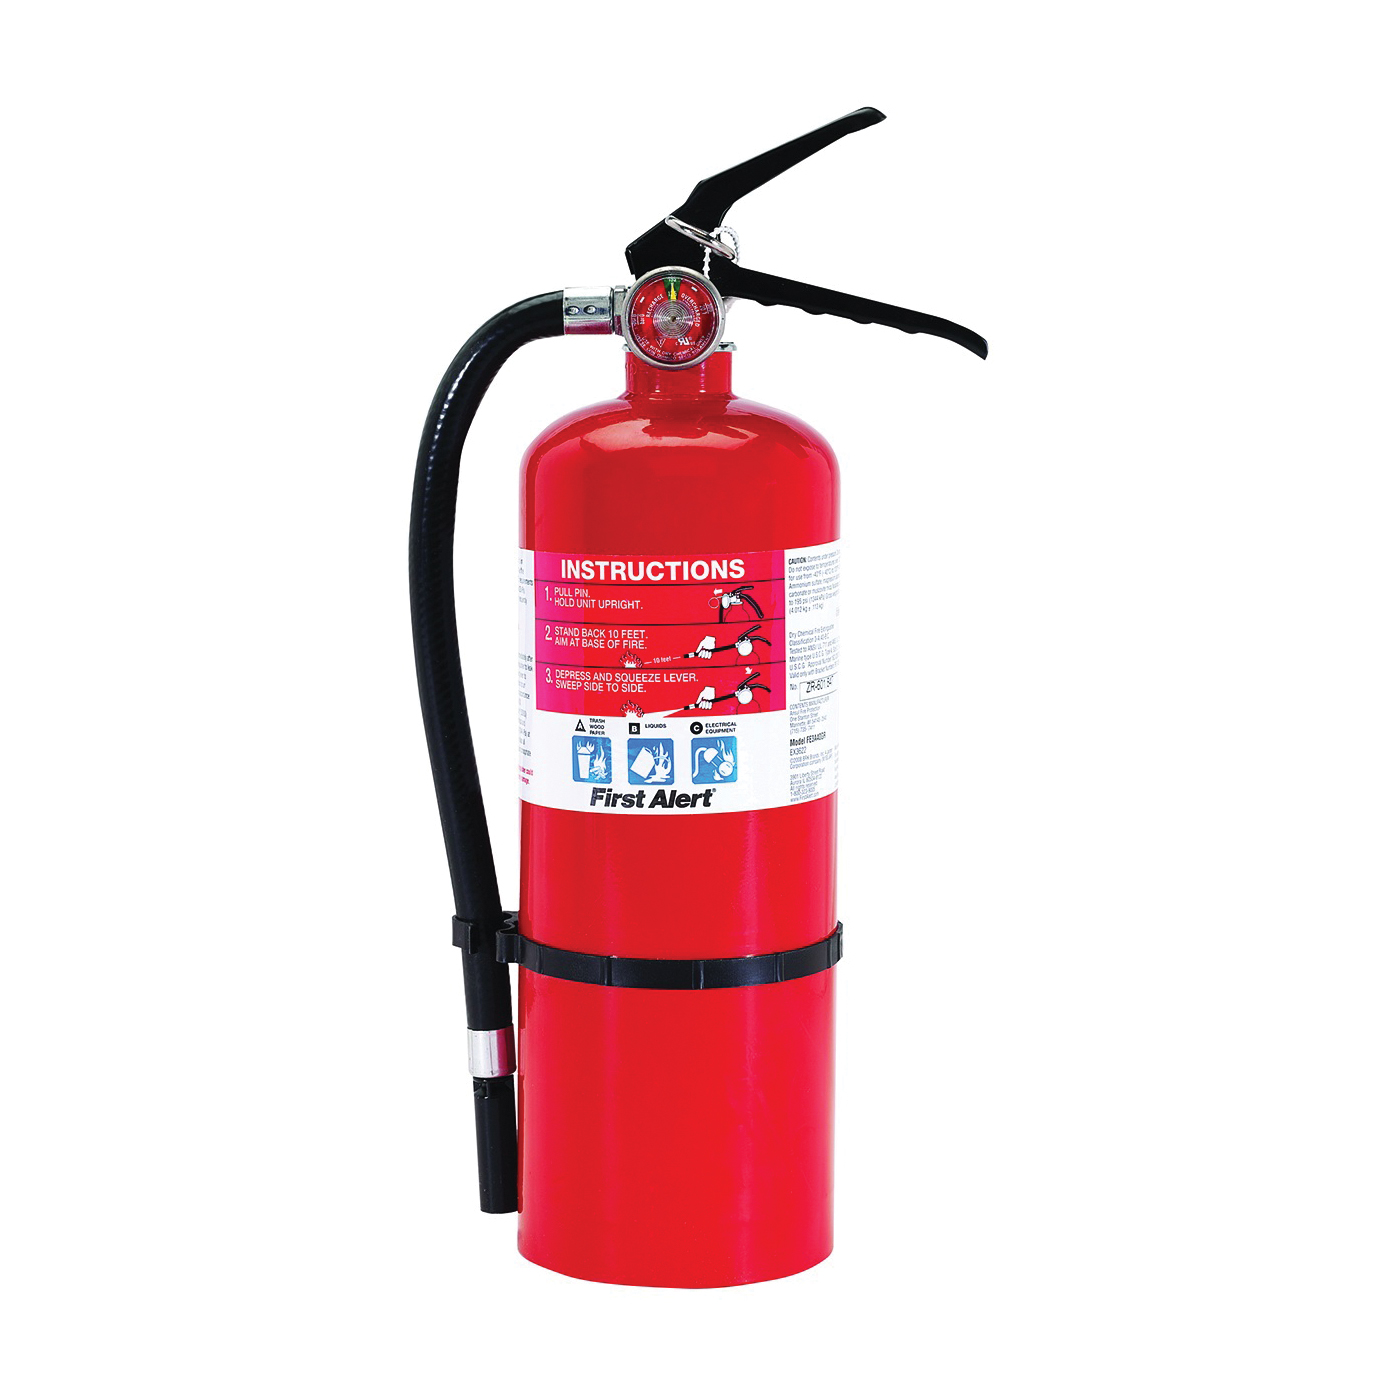 PRO5 Fire Extinguisher, 5 lb Capacity, Monoammonium Phosphate, 3-A:40-B:C Class, Wall Mounting